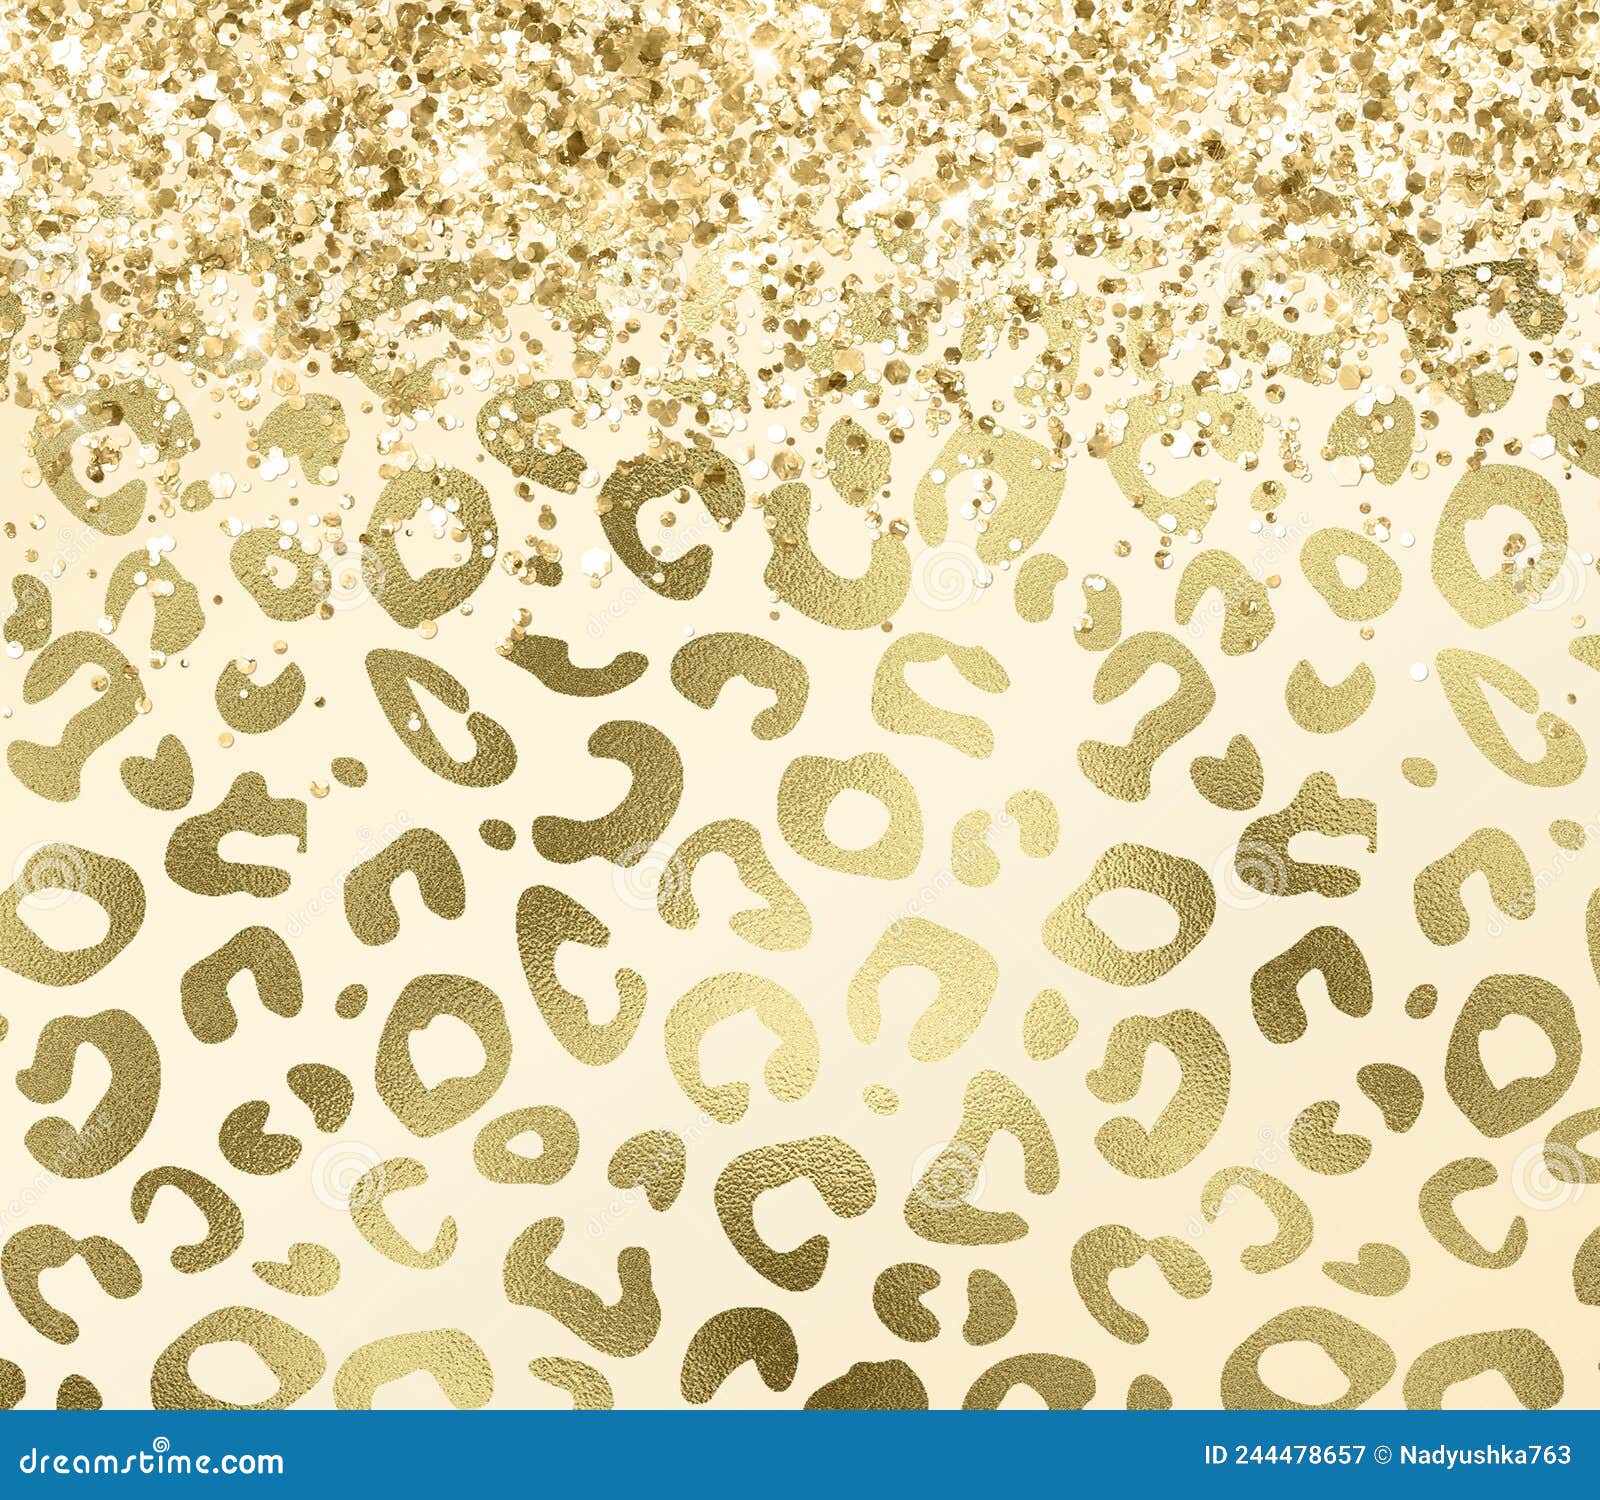 Golden Leopard Print Texture, Gold Glitter Gradienr Background. Stock ...